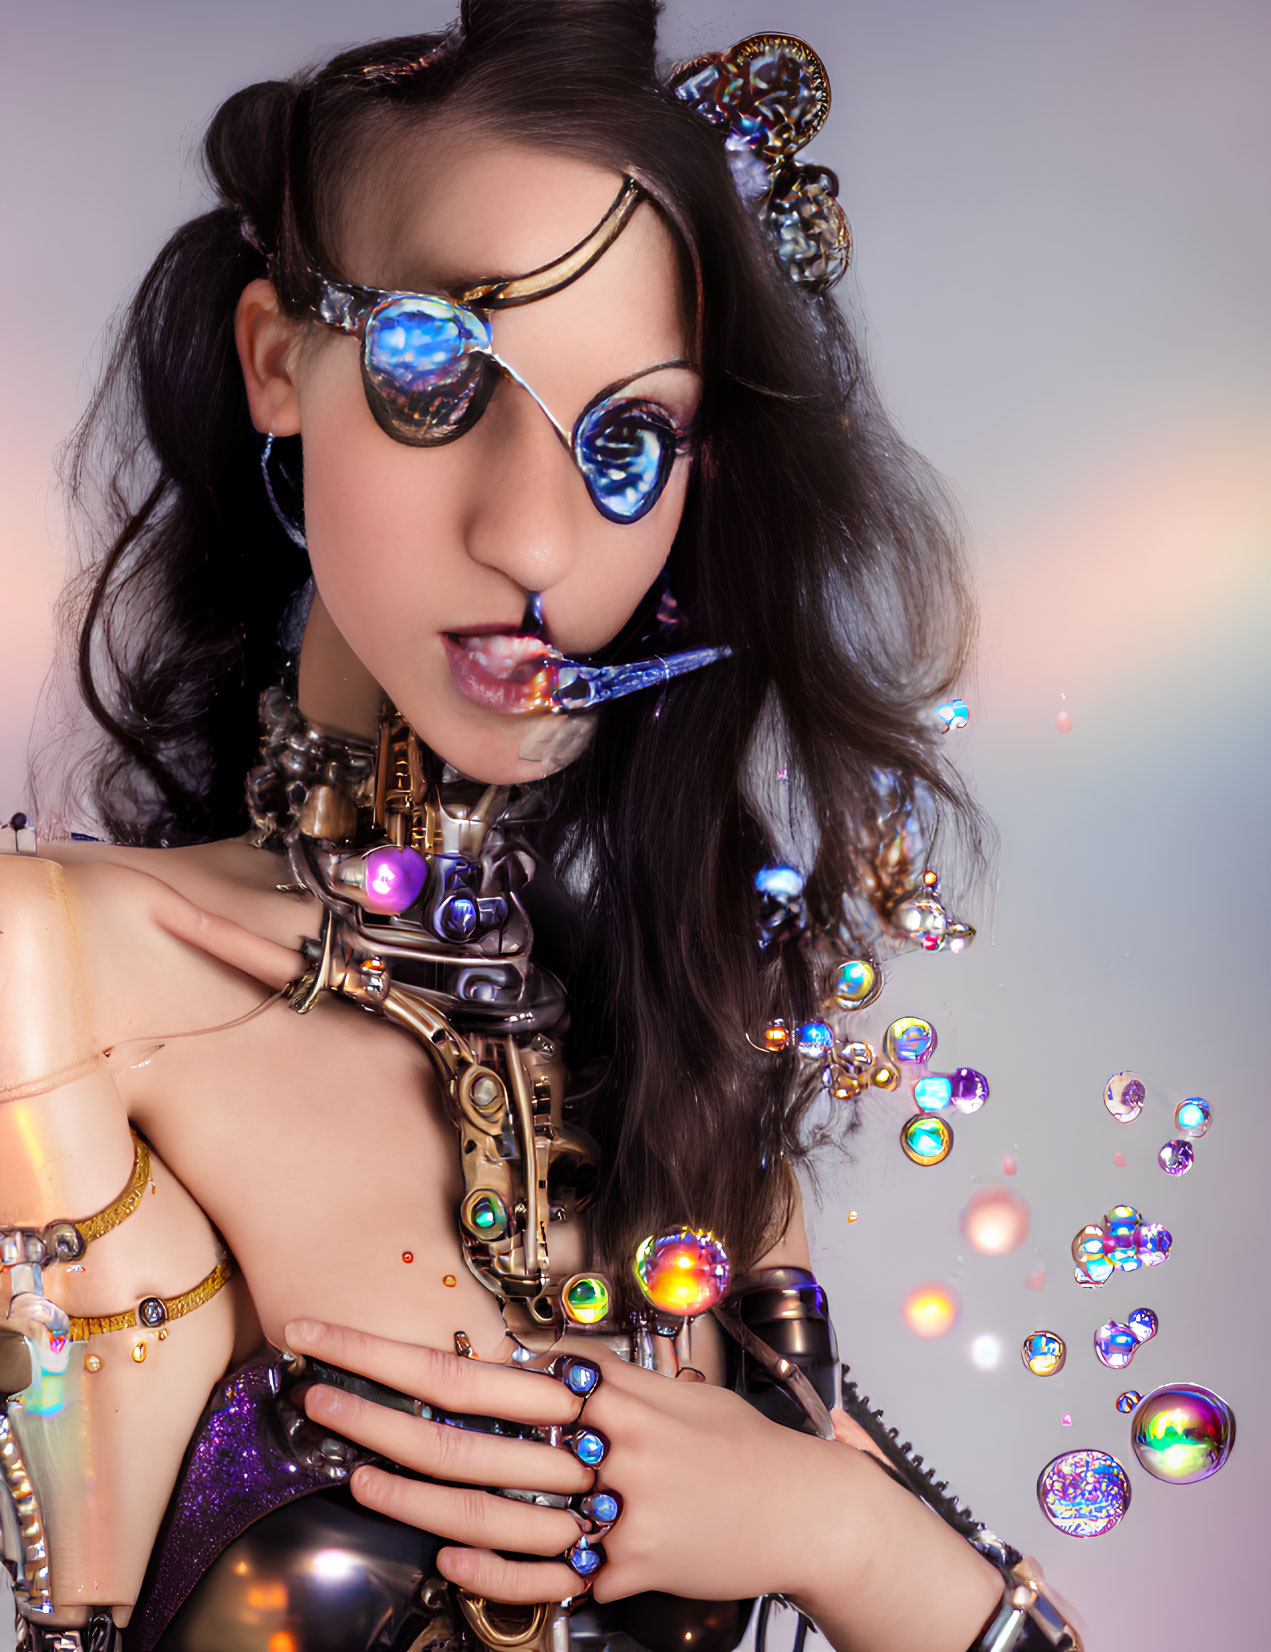 Cyberpunk-themed woman with metallic arm prosthetics and colored lens eyewear among floating iridescent